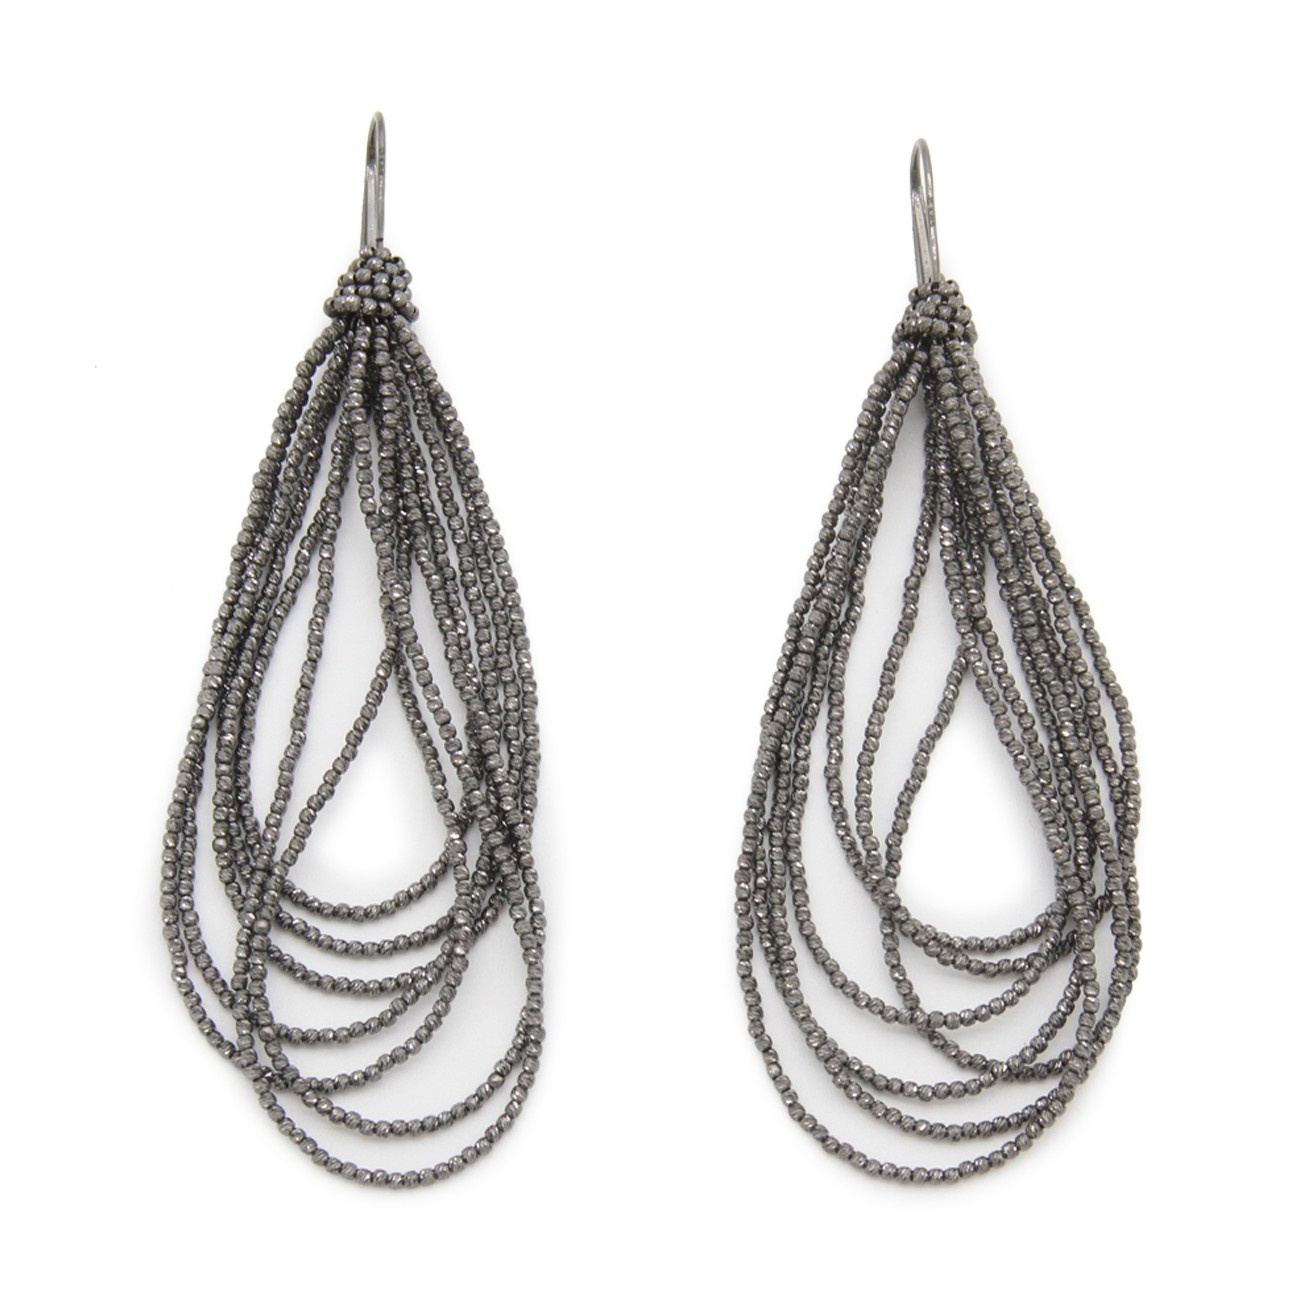 silver tone metal earrings - 2